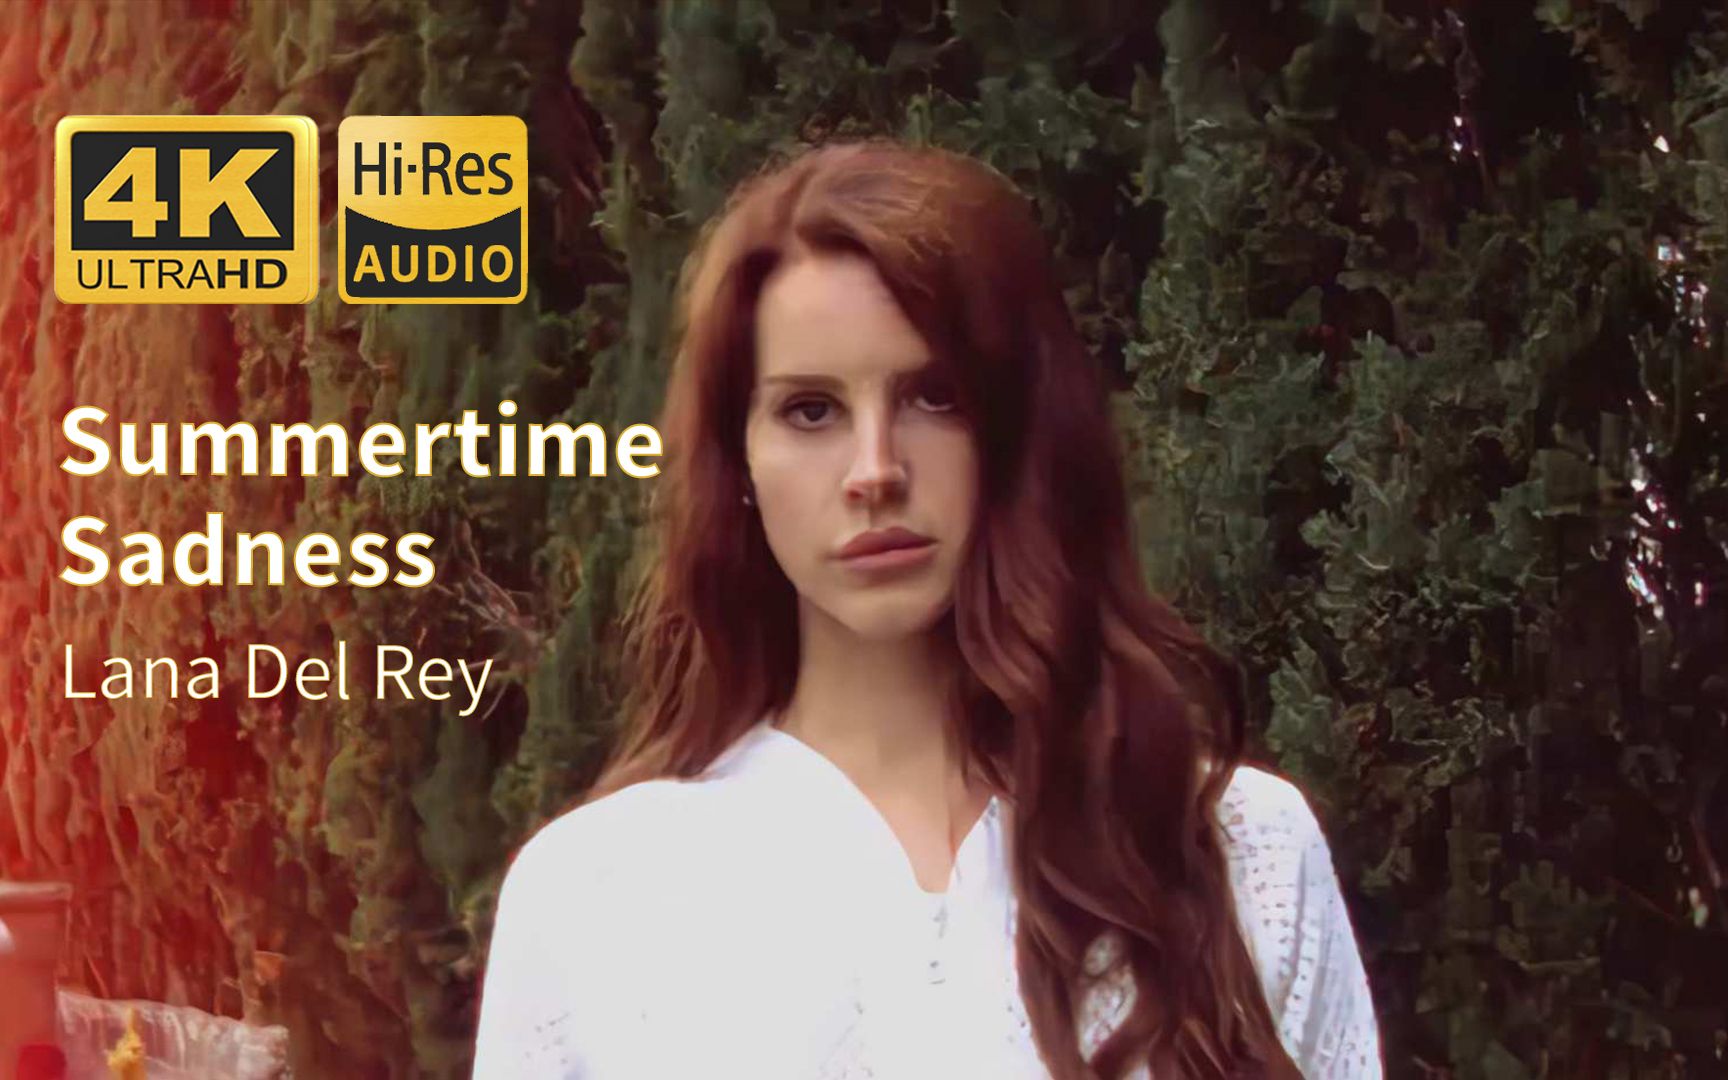 【4Khires】Lana Del Rey《Summertime Sadness》打雷姐经典单曲收藏版 双语字幕